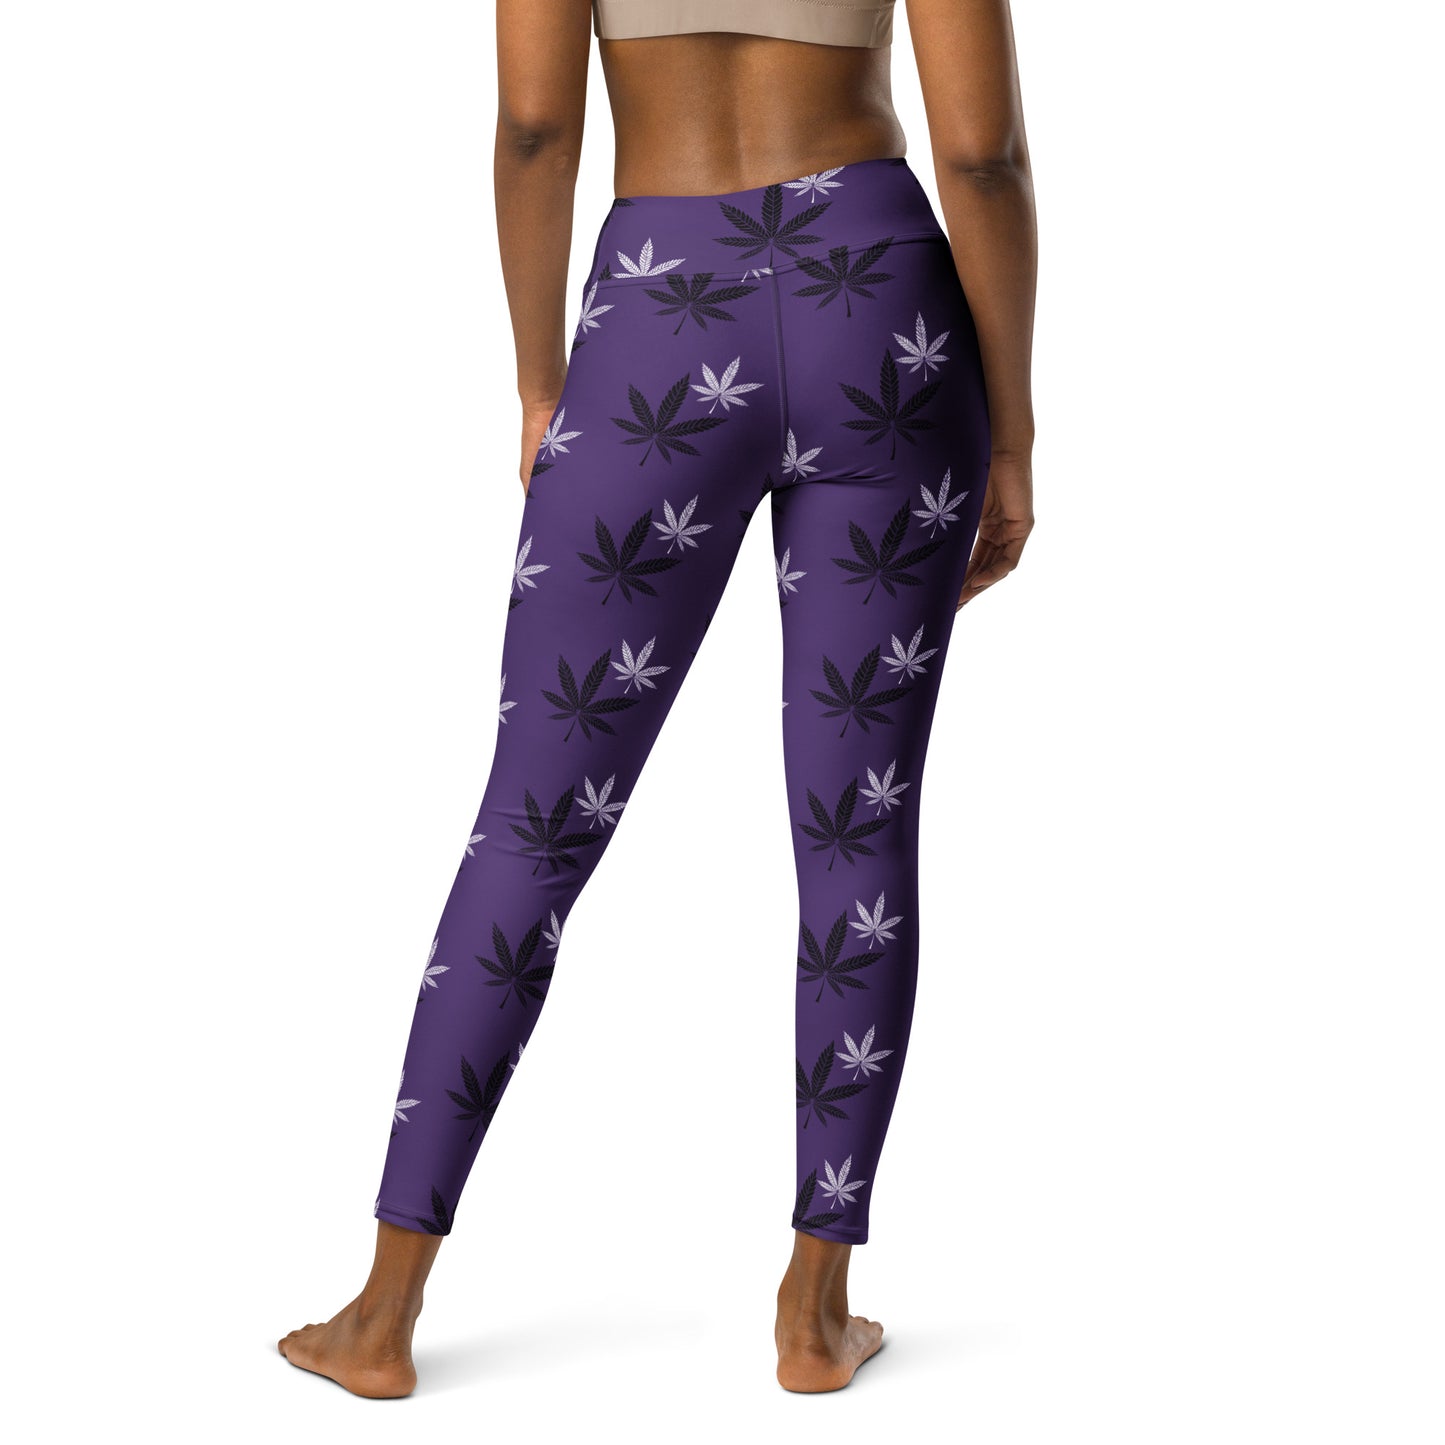 Purple Yoga Leggings